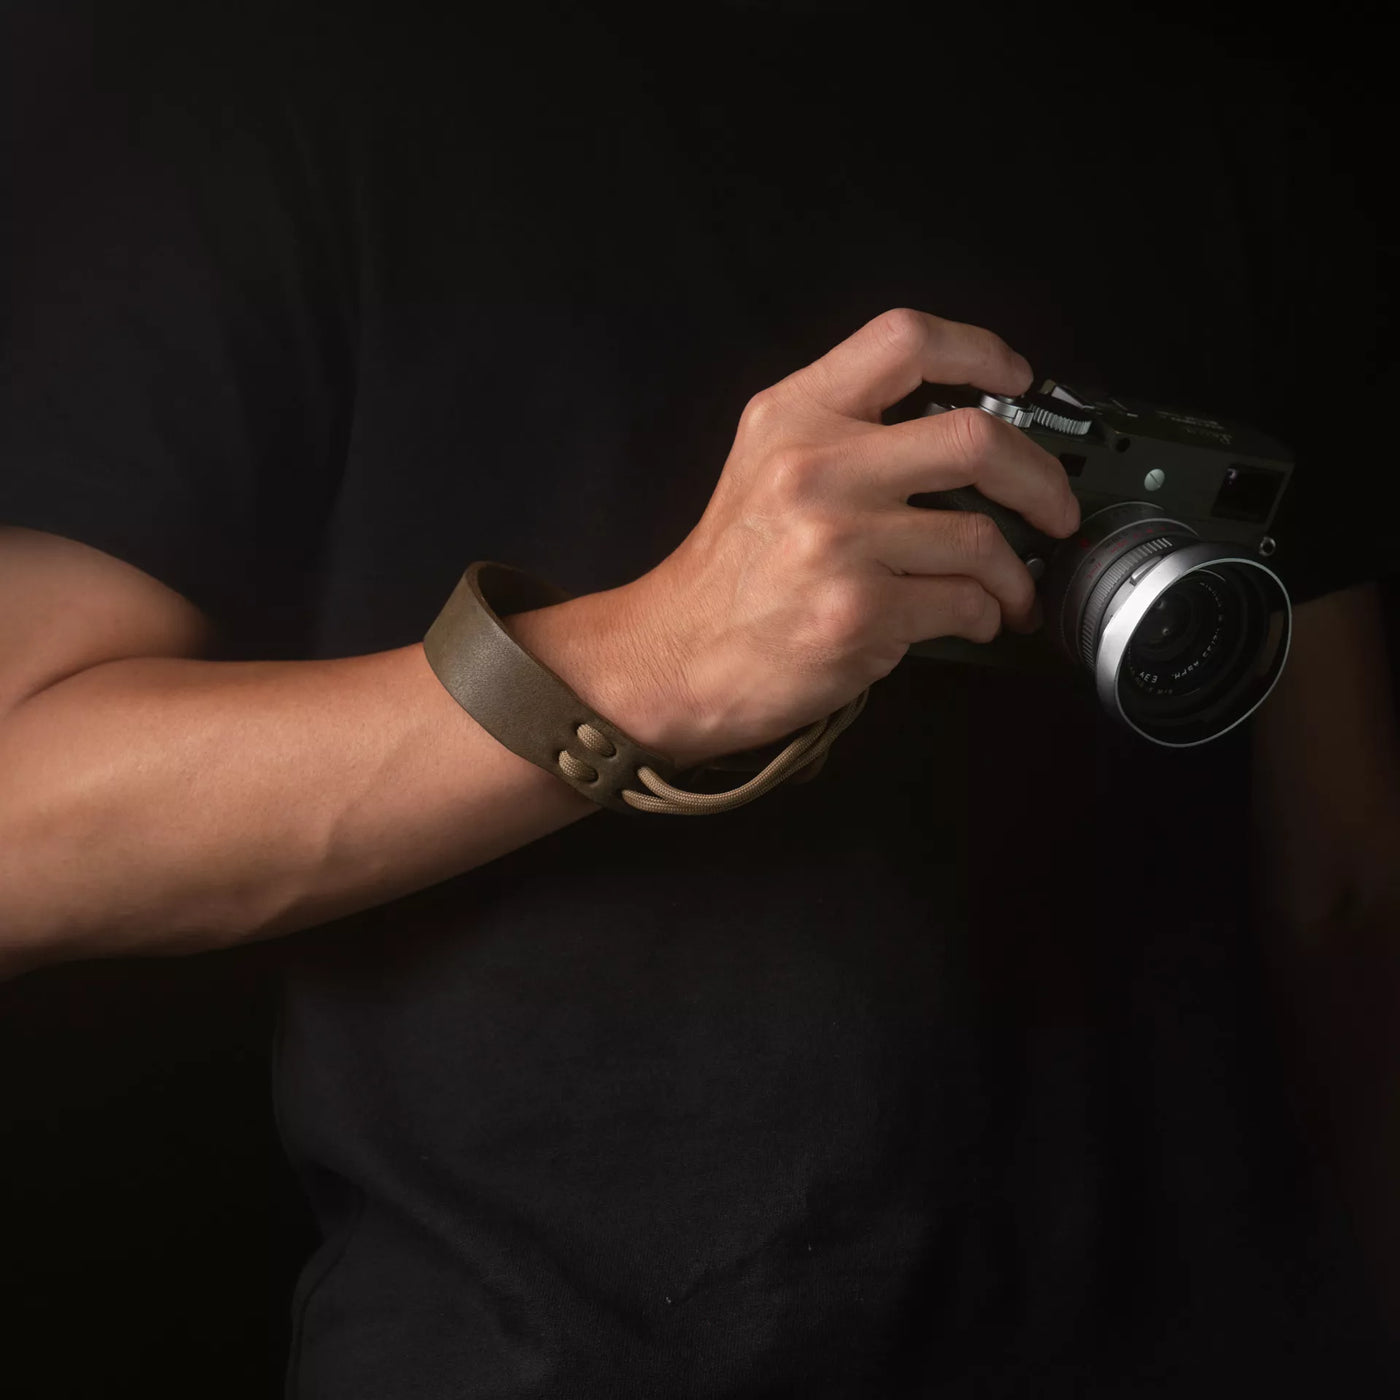 Wotancraft - Parachord X Leather Camera Wrist Strap 007